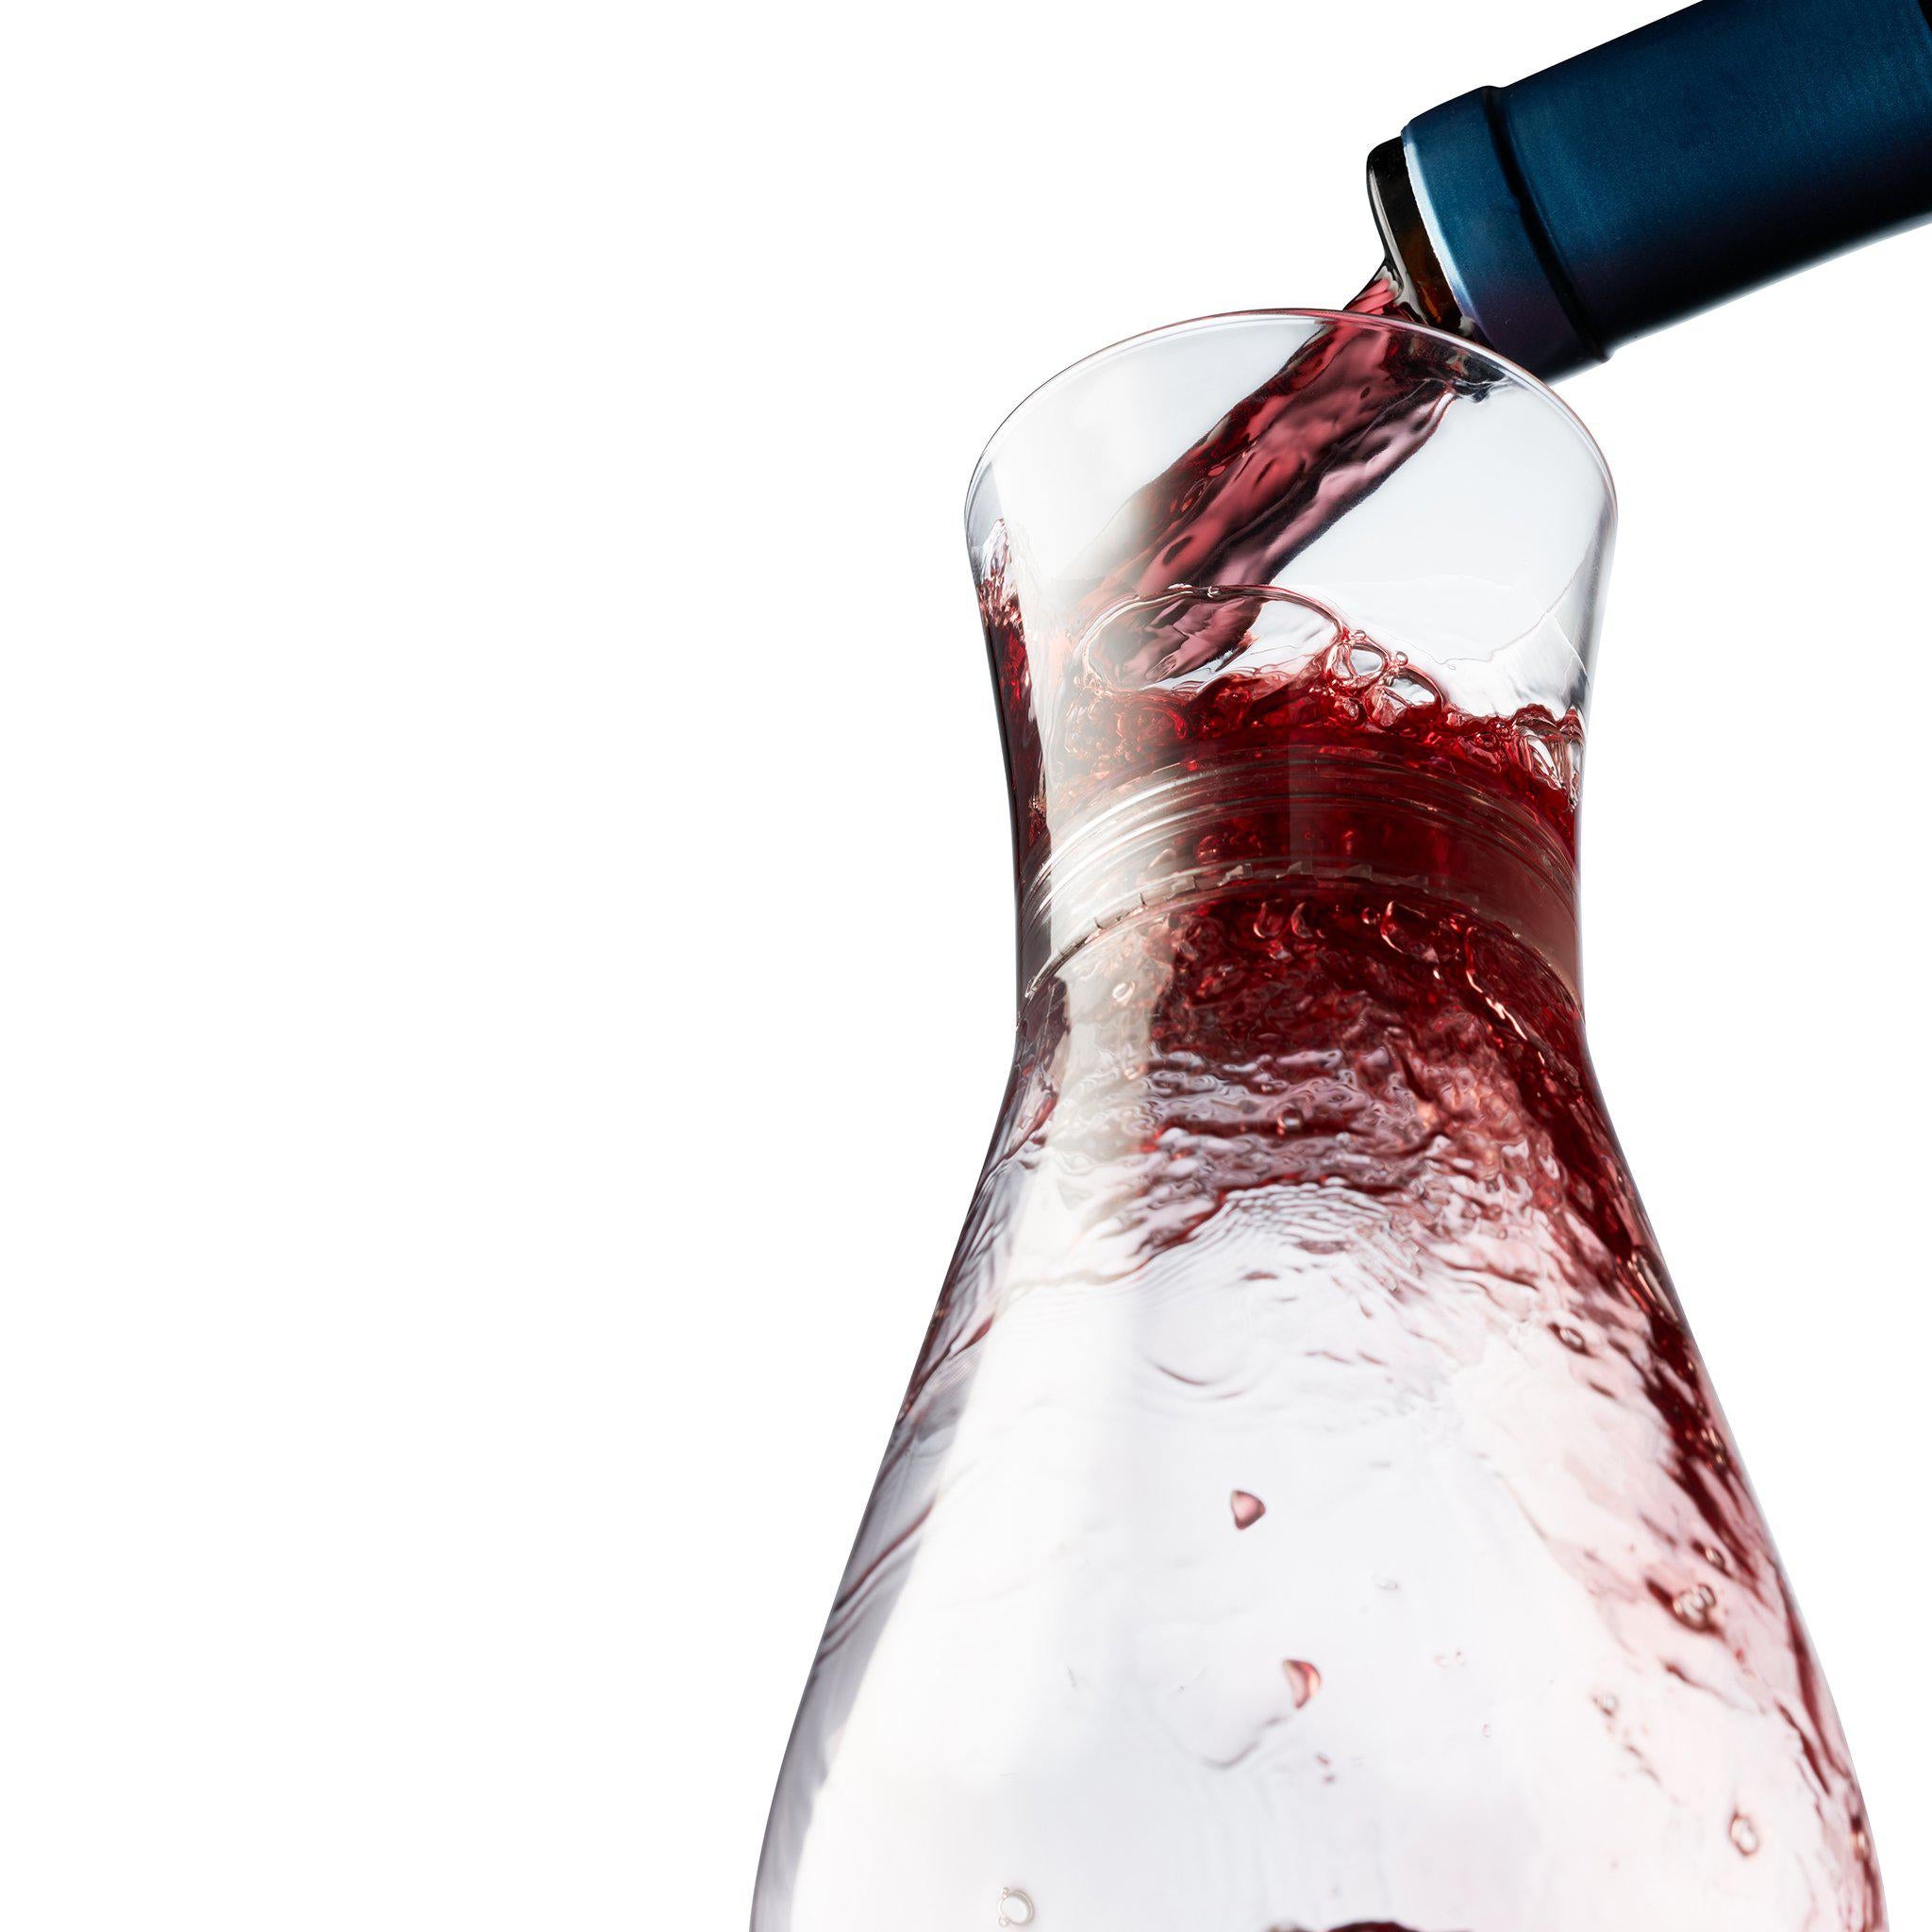 1 Liter Glass Carafe, 4 Pack - Elegant Wine Decanter and Drink Pitcher - Narrow